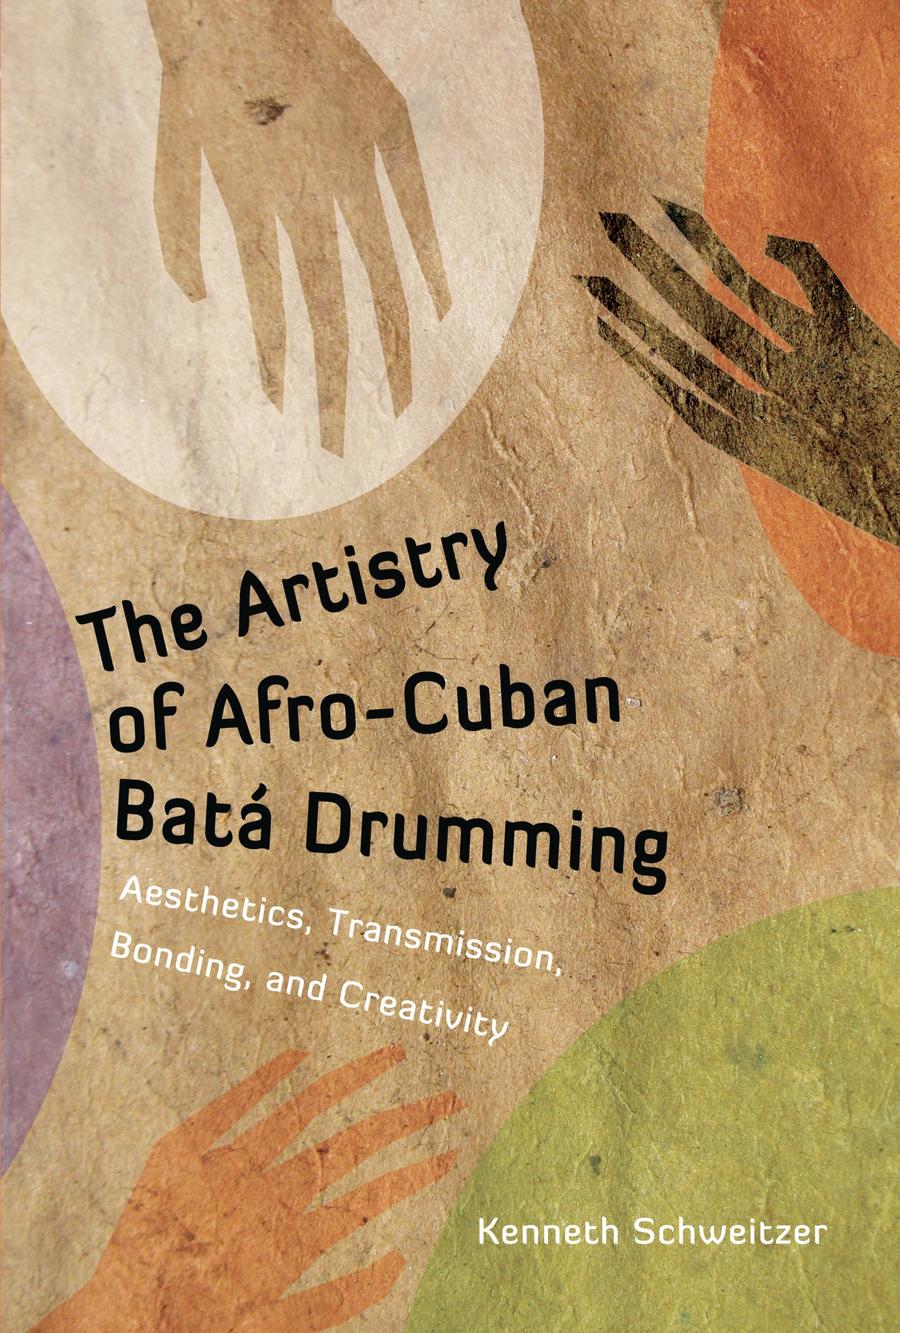 SANTERIA A pantheistic Afro-Cuban - Caribbean Discourse